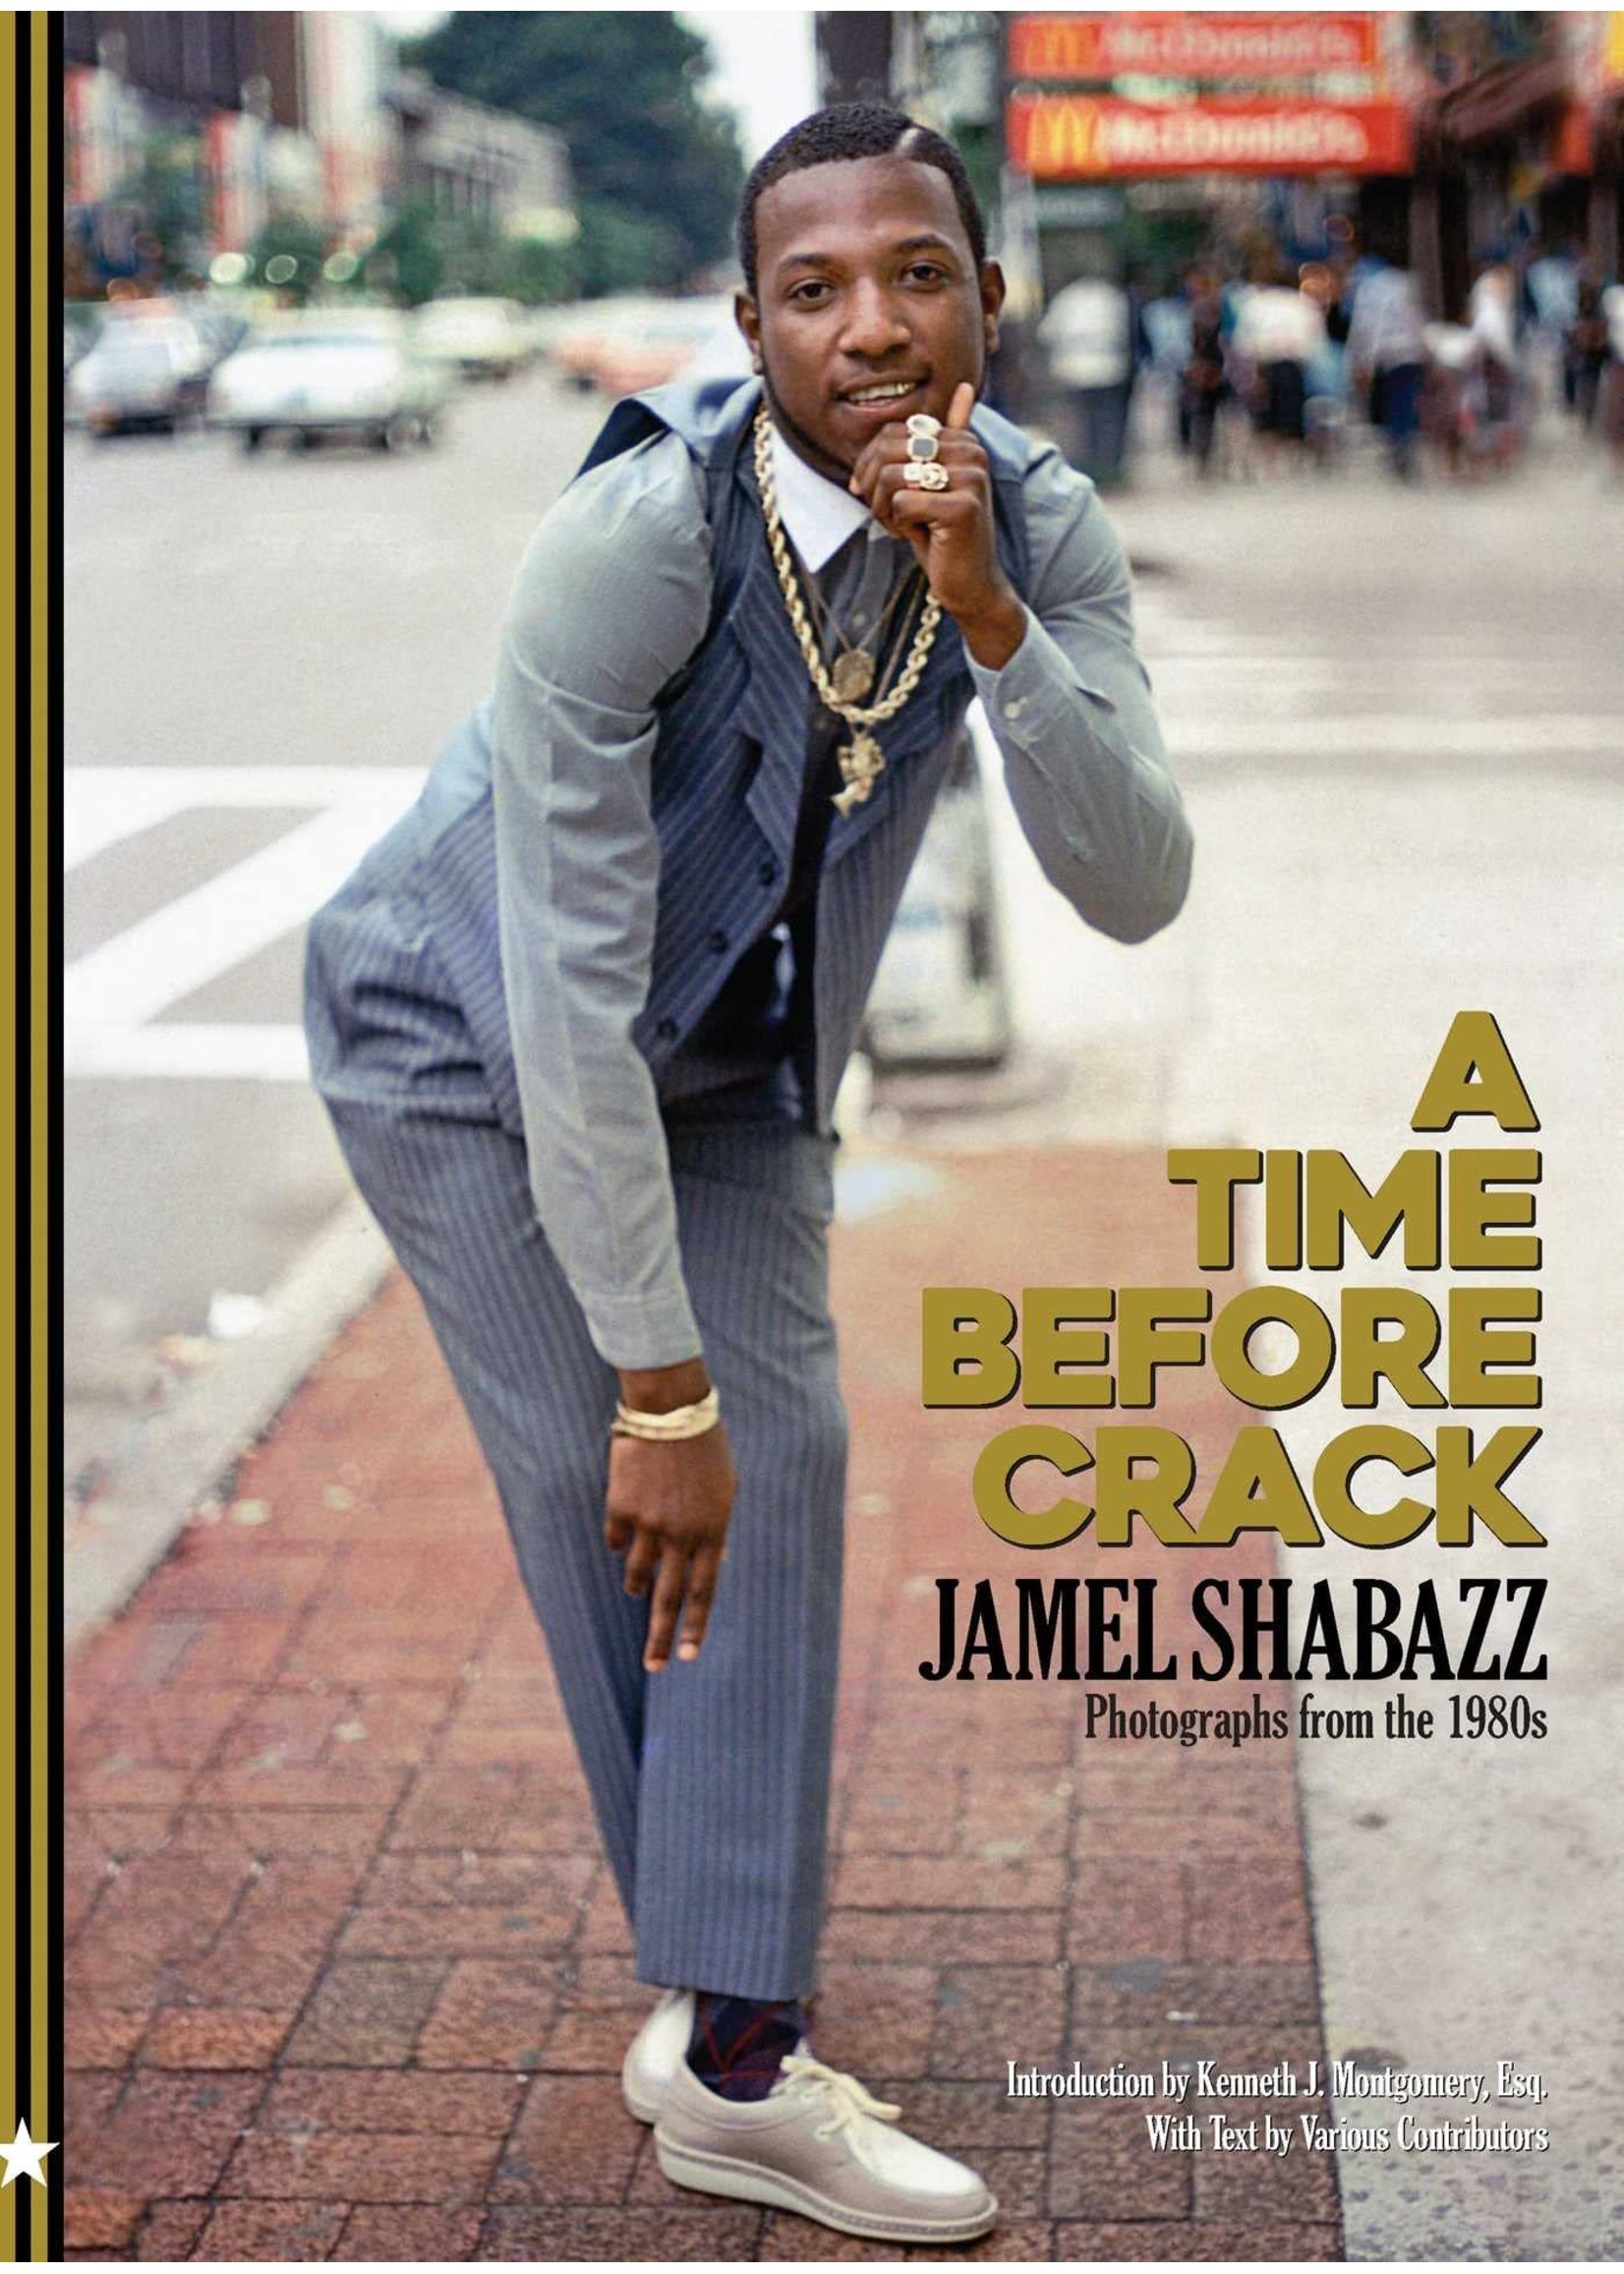 A Time Before Crack: Jamel Shabazz